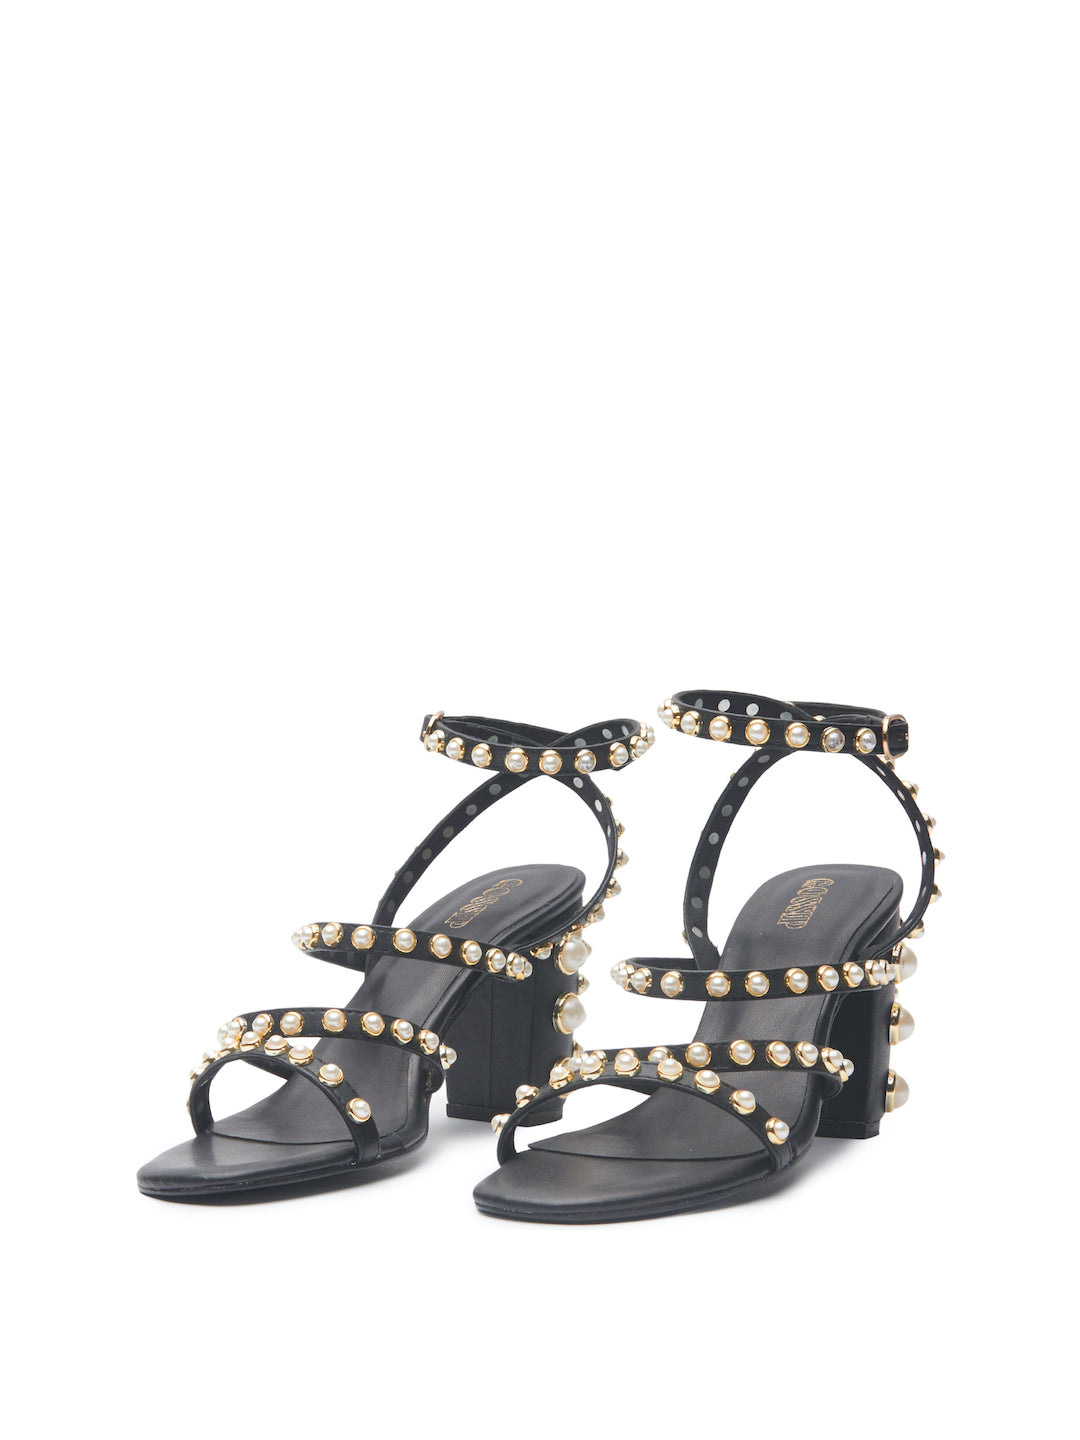 Pin by Carla Kirk on Type 4 | Black sandals heels, Black gladiator heels,  Leather gladiator sandals